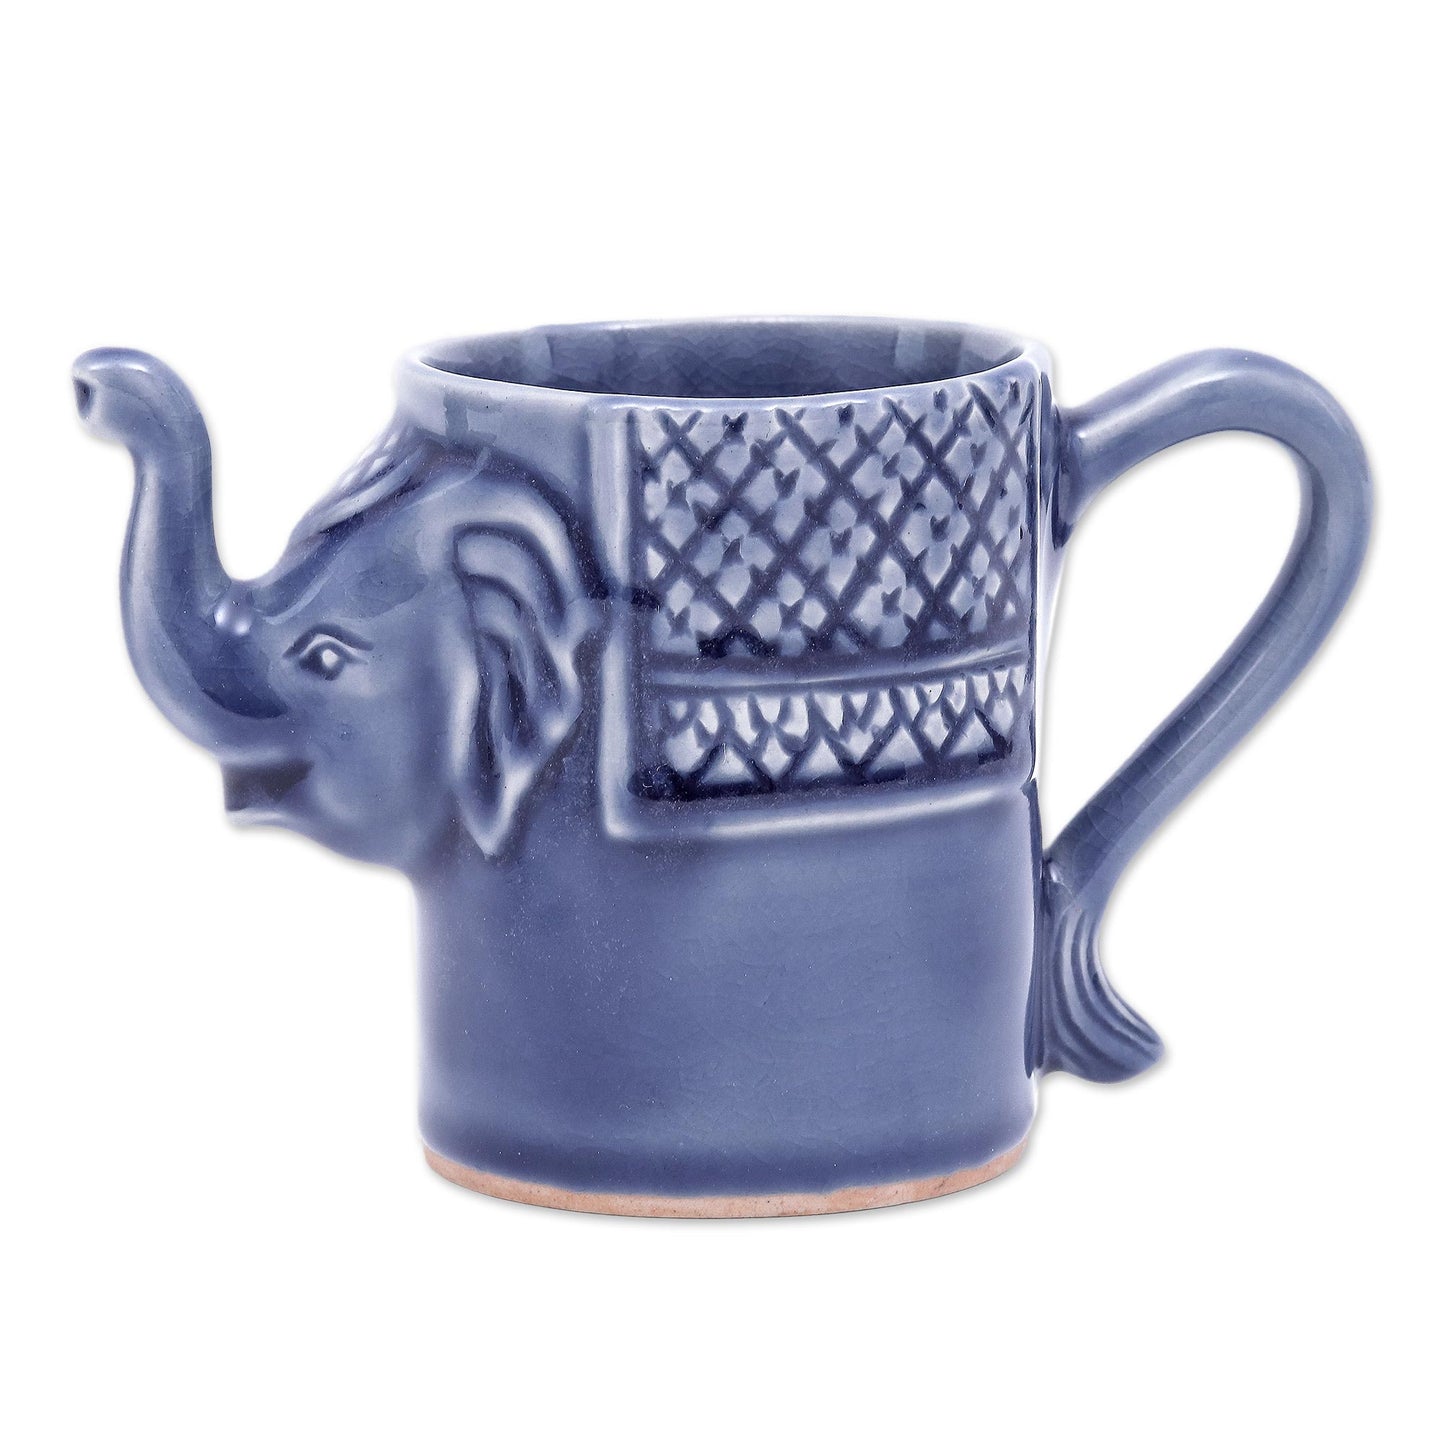 Elephant Essence in Indigo Blue Celadon Ceramic Elephant Mug